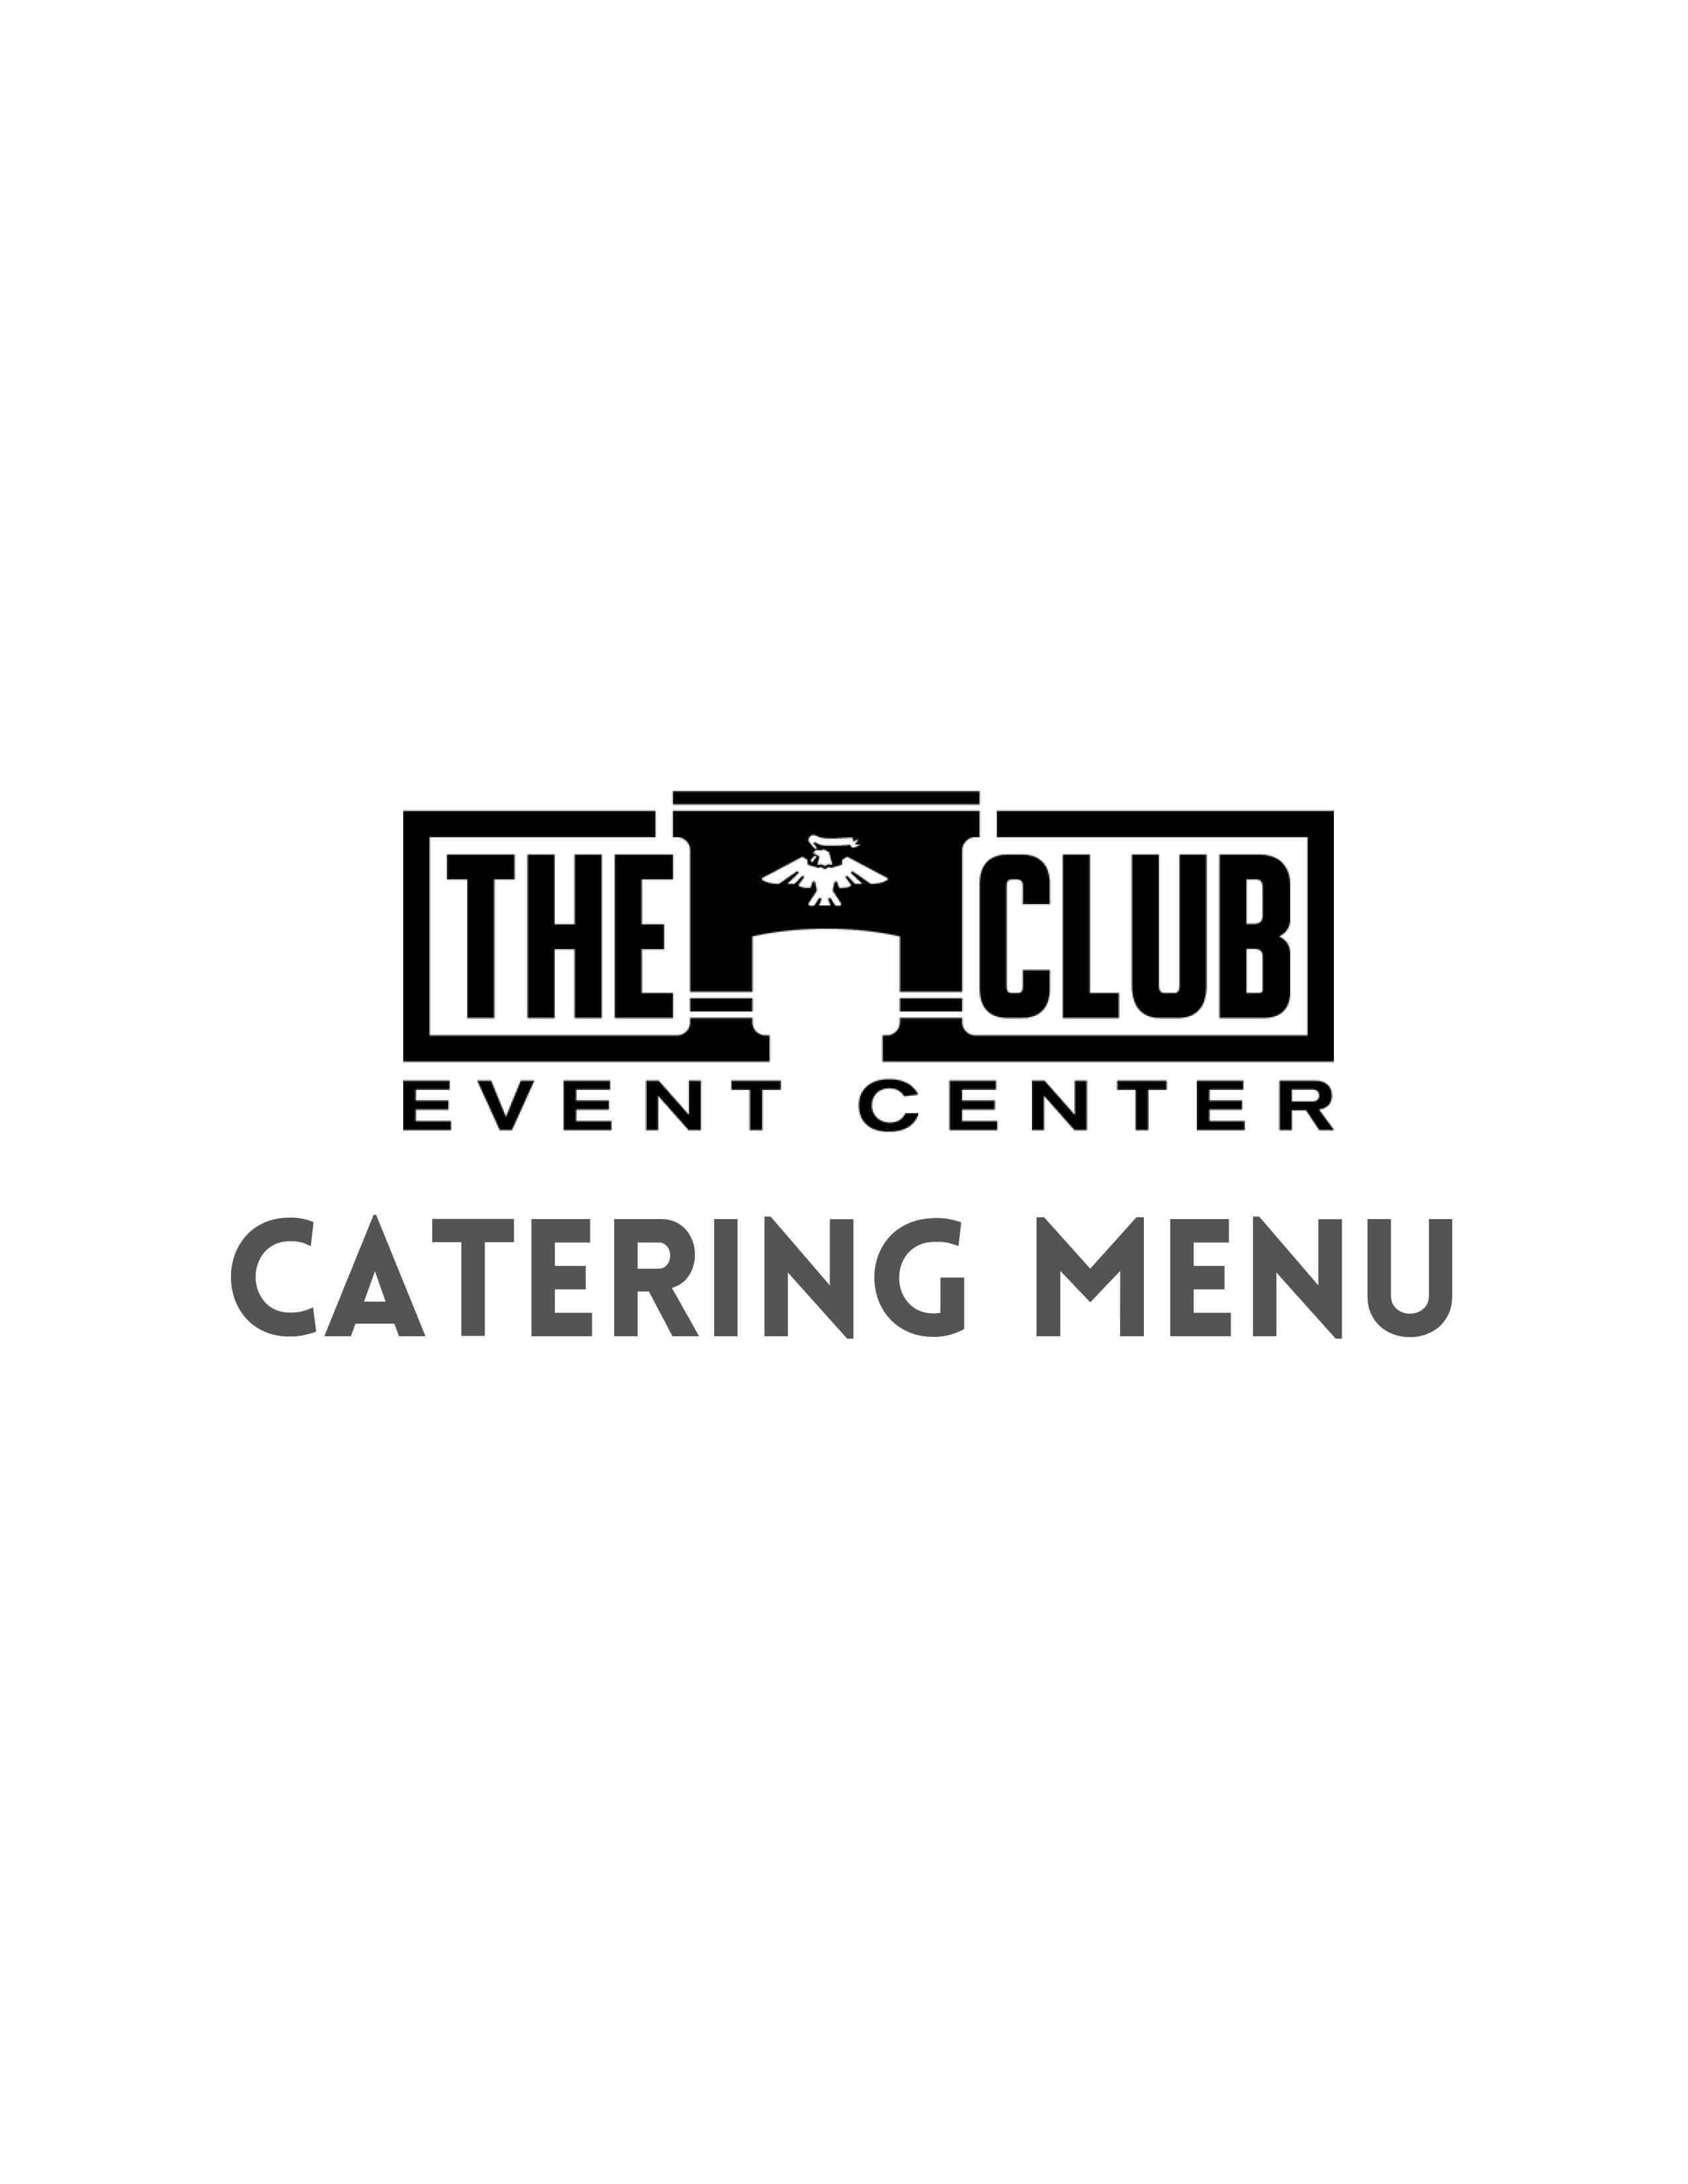 FLHS_the-club_catering-menu-1.jpg